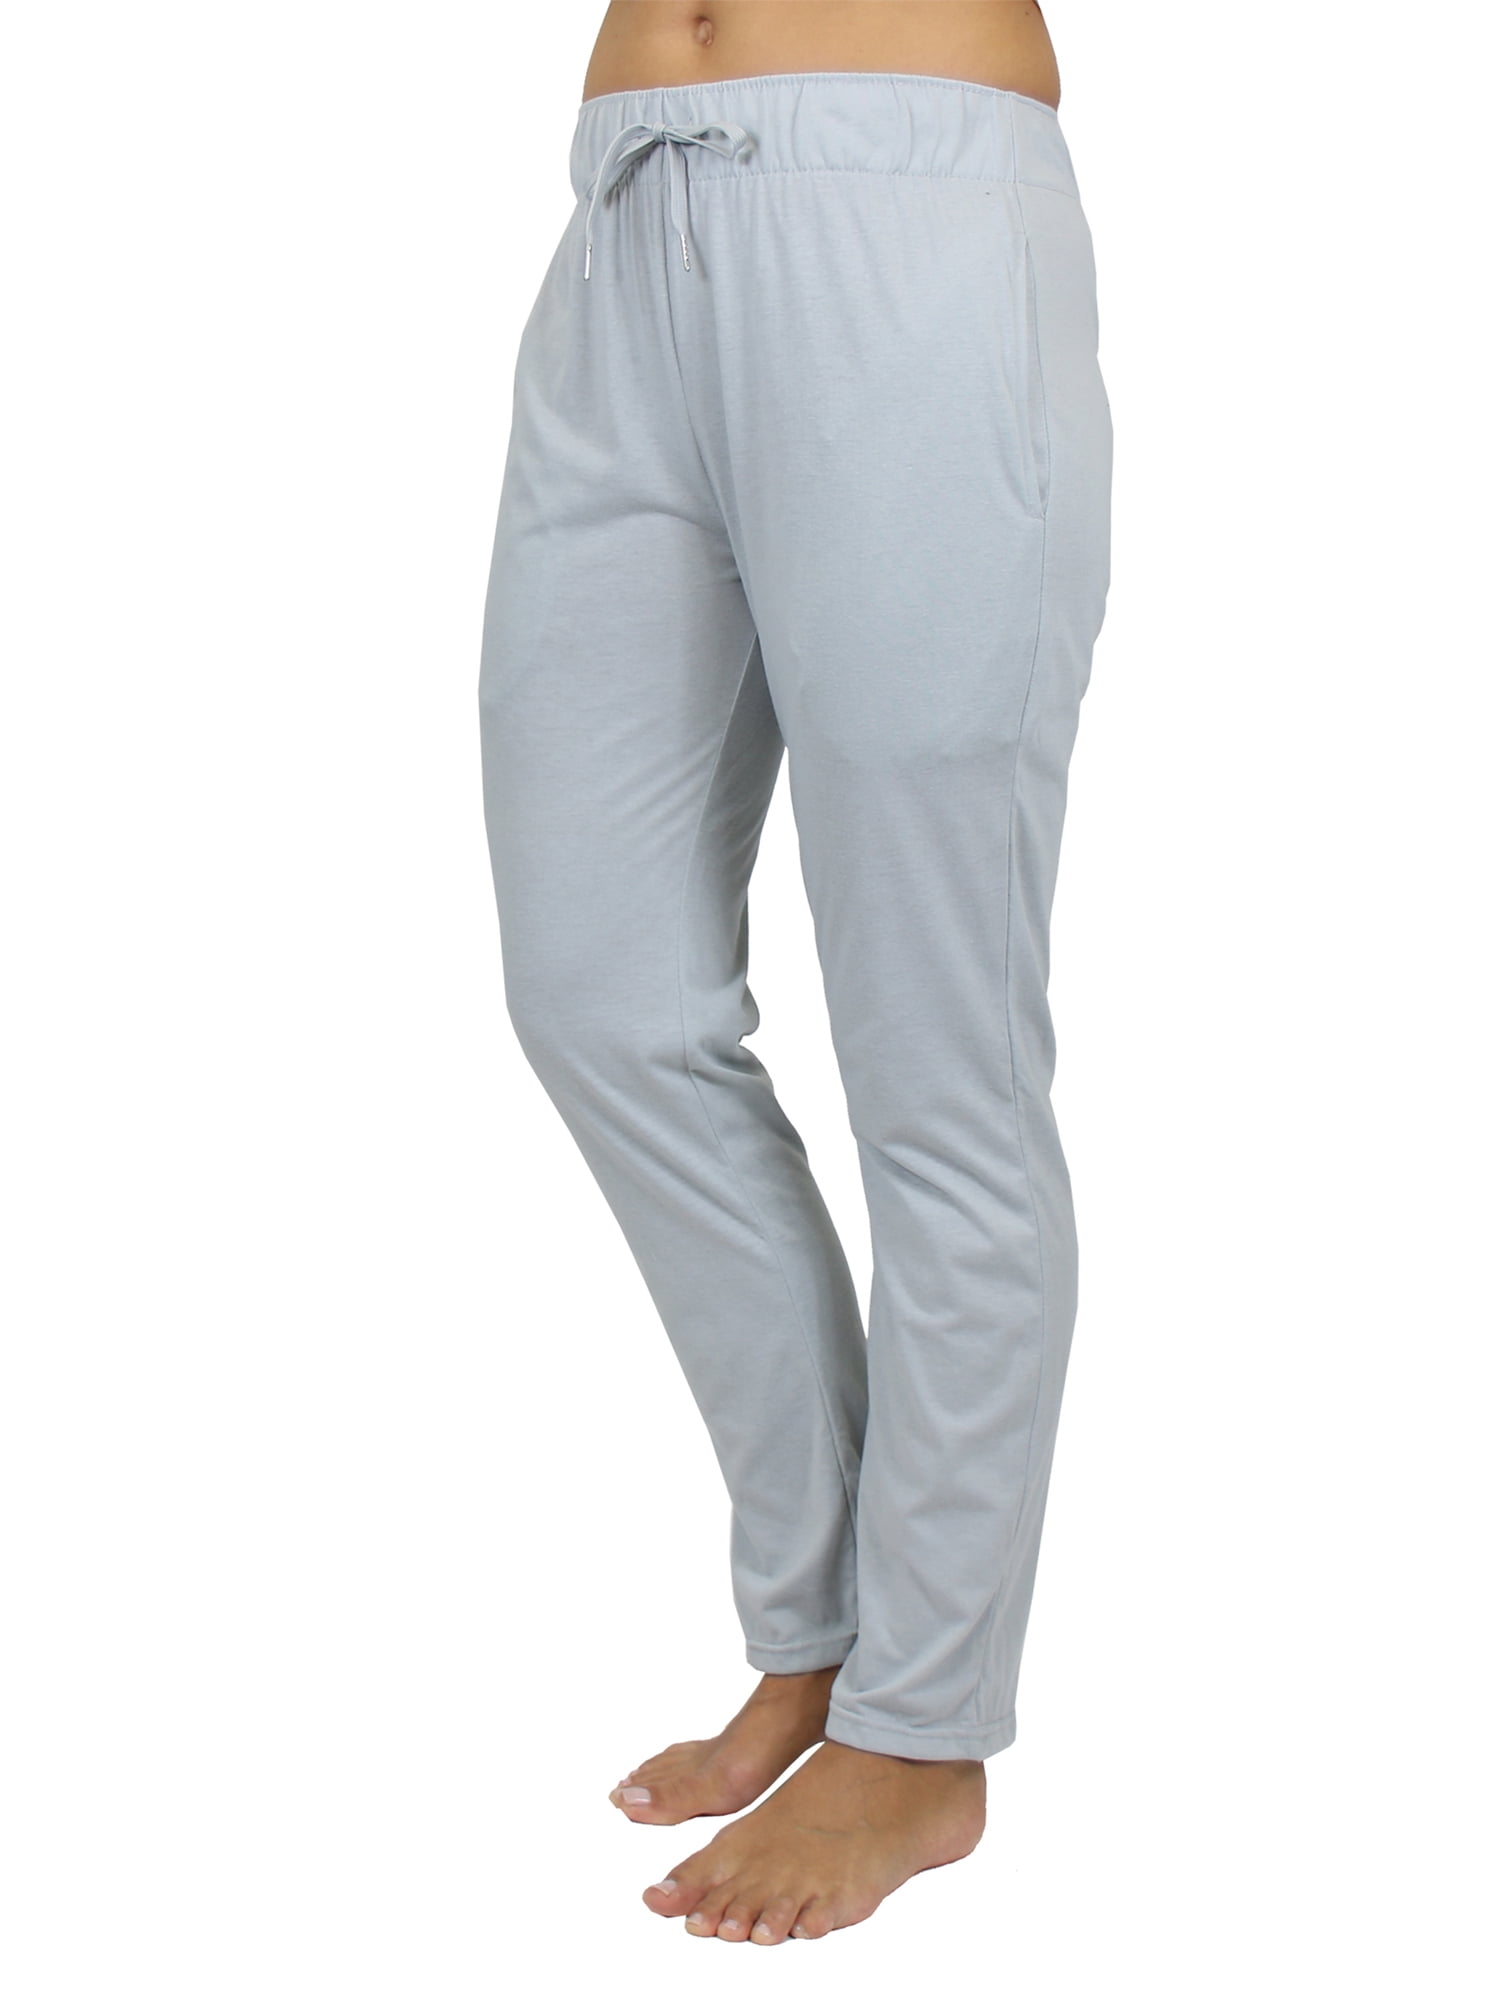 Women's Loose Fit Classic Lounge Pants (Sizes, S-3XL) - Walmart.com